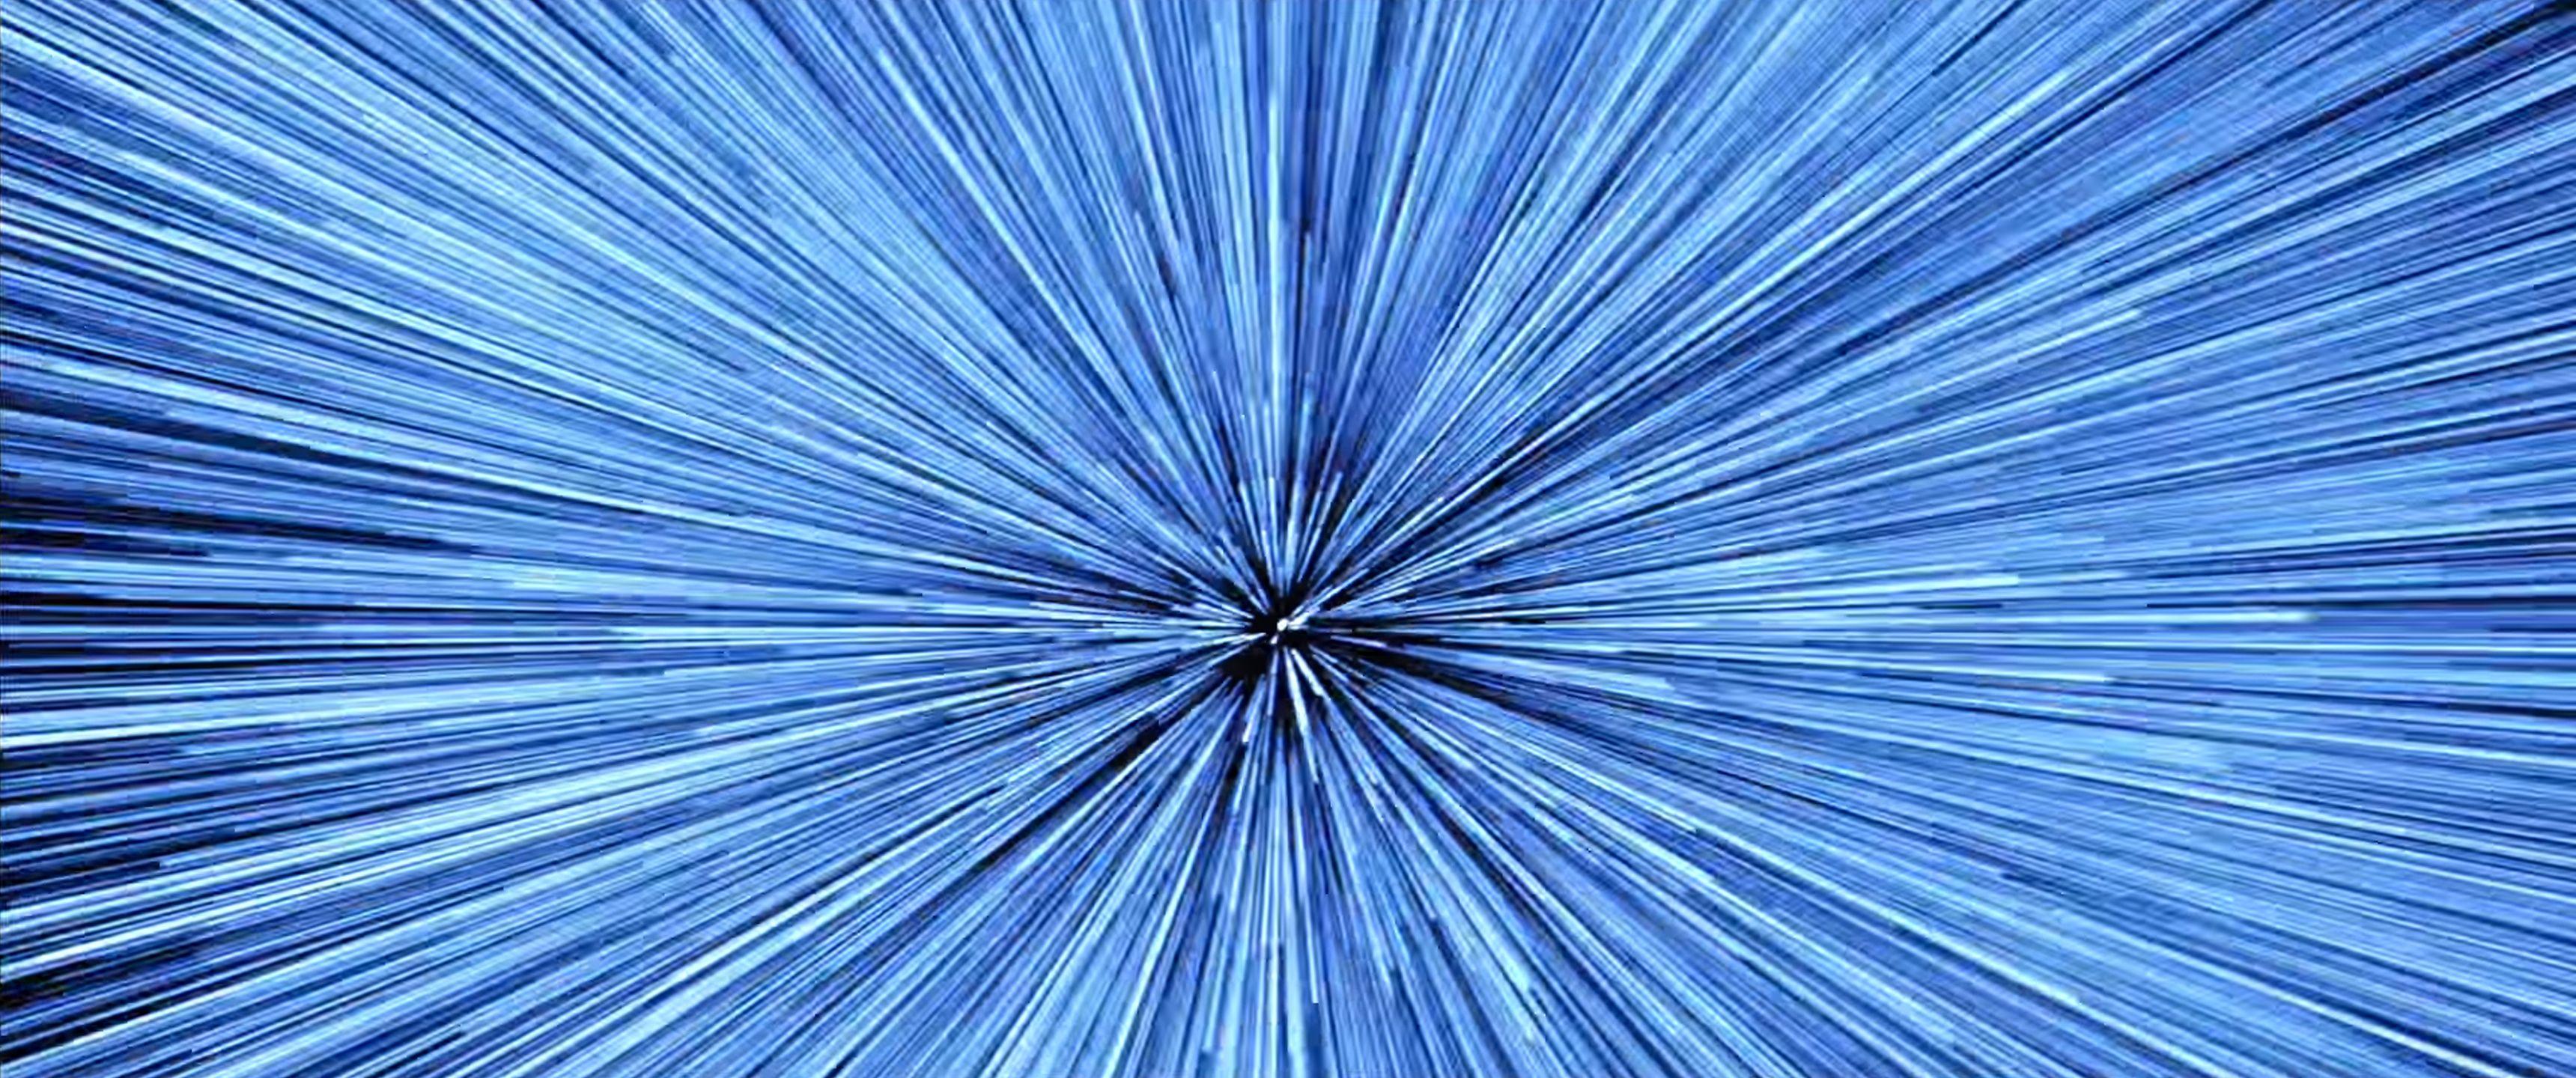 star wars hyperspace background